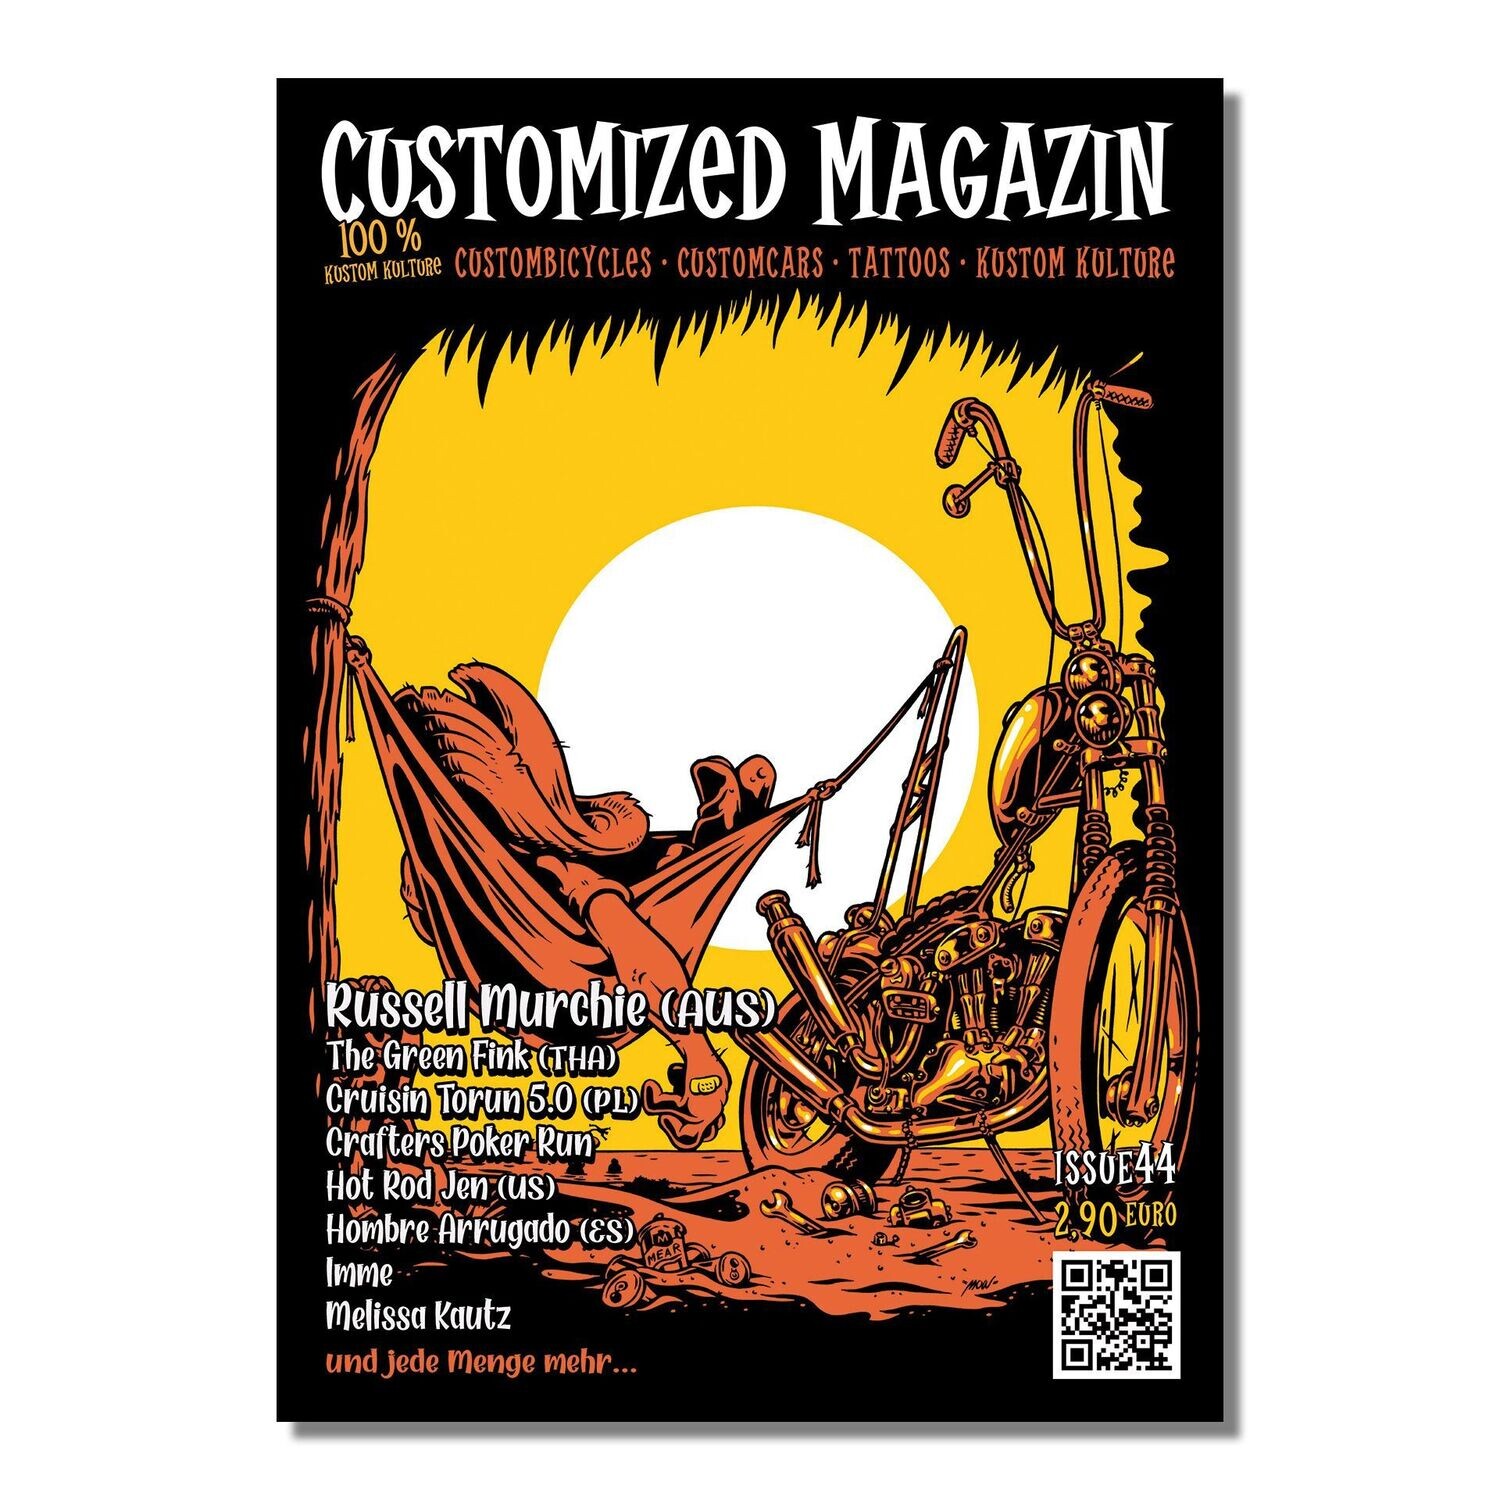 Customized Magazin Issue44